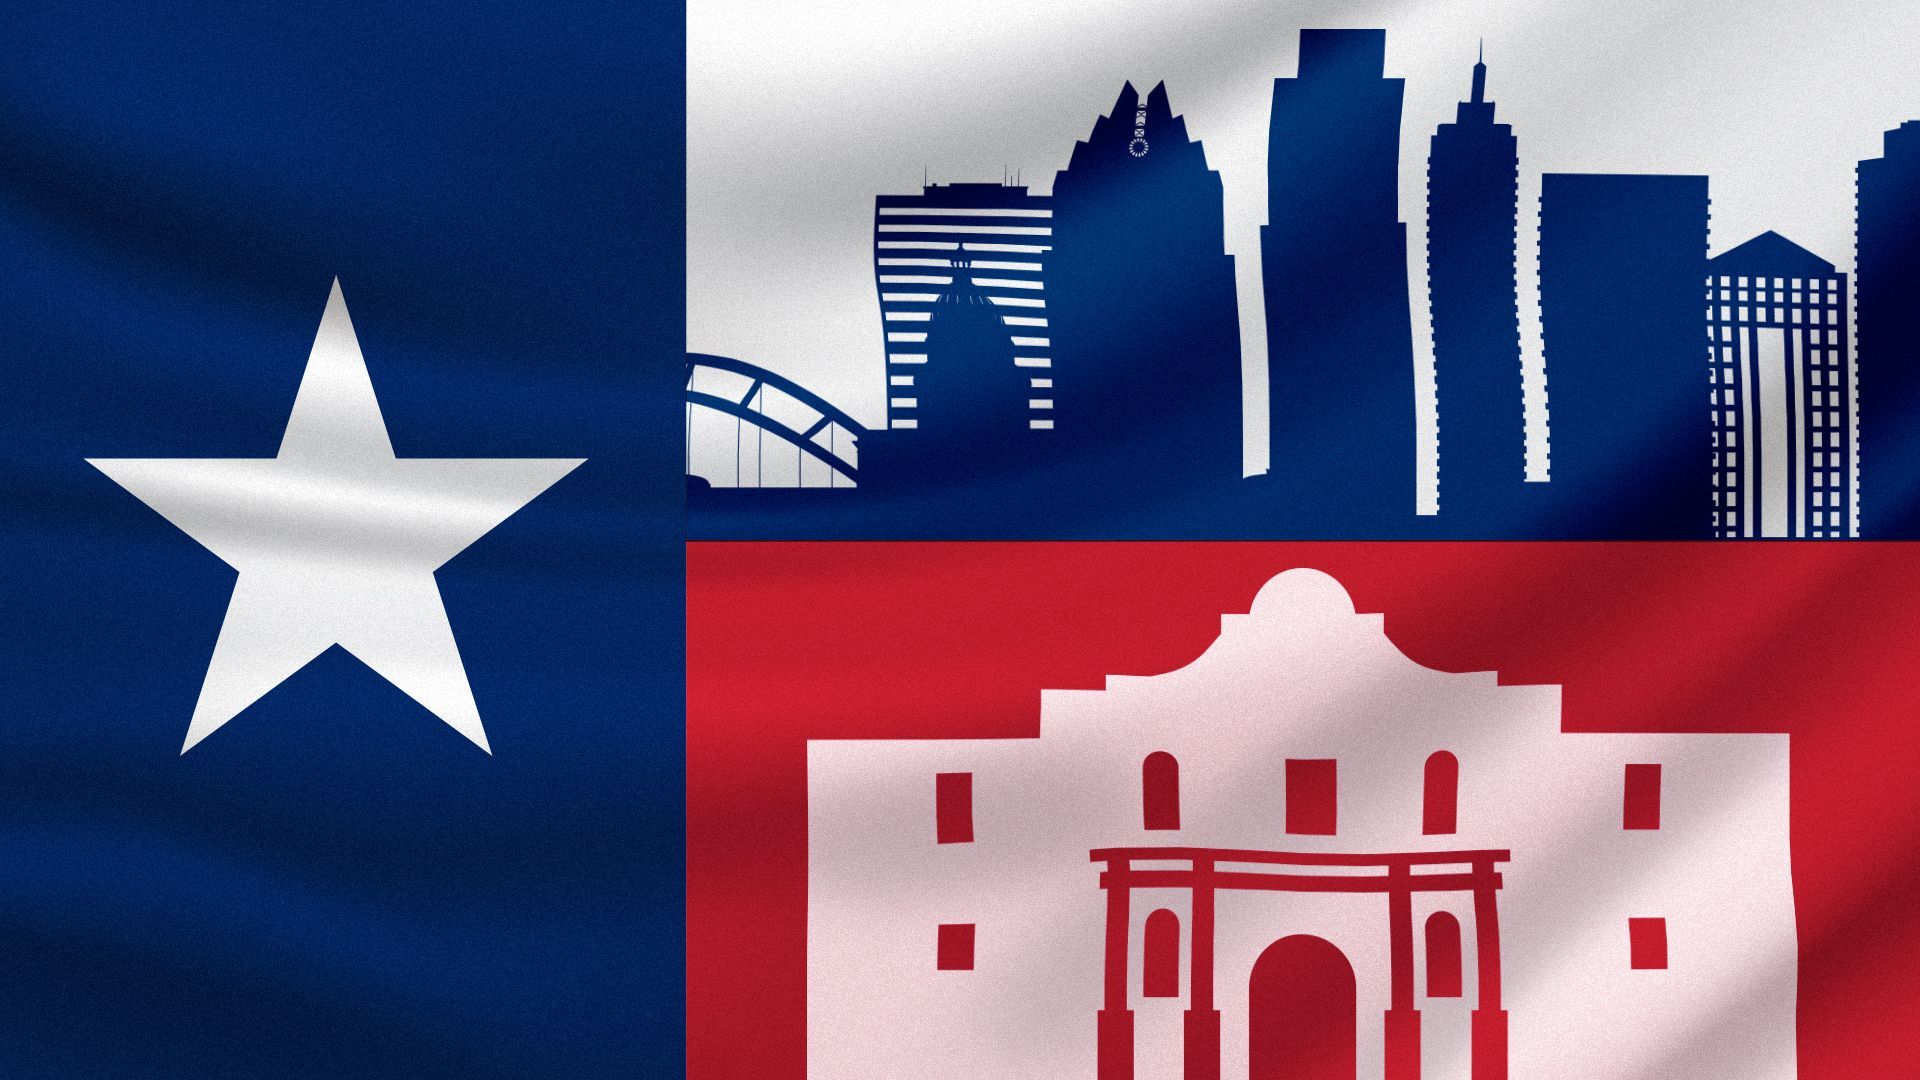 Illustration of the Austin skyline and the Alamo on the Texas flag.